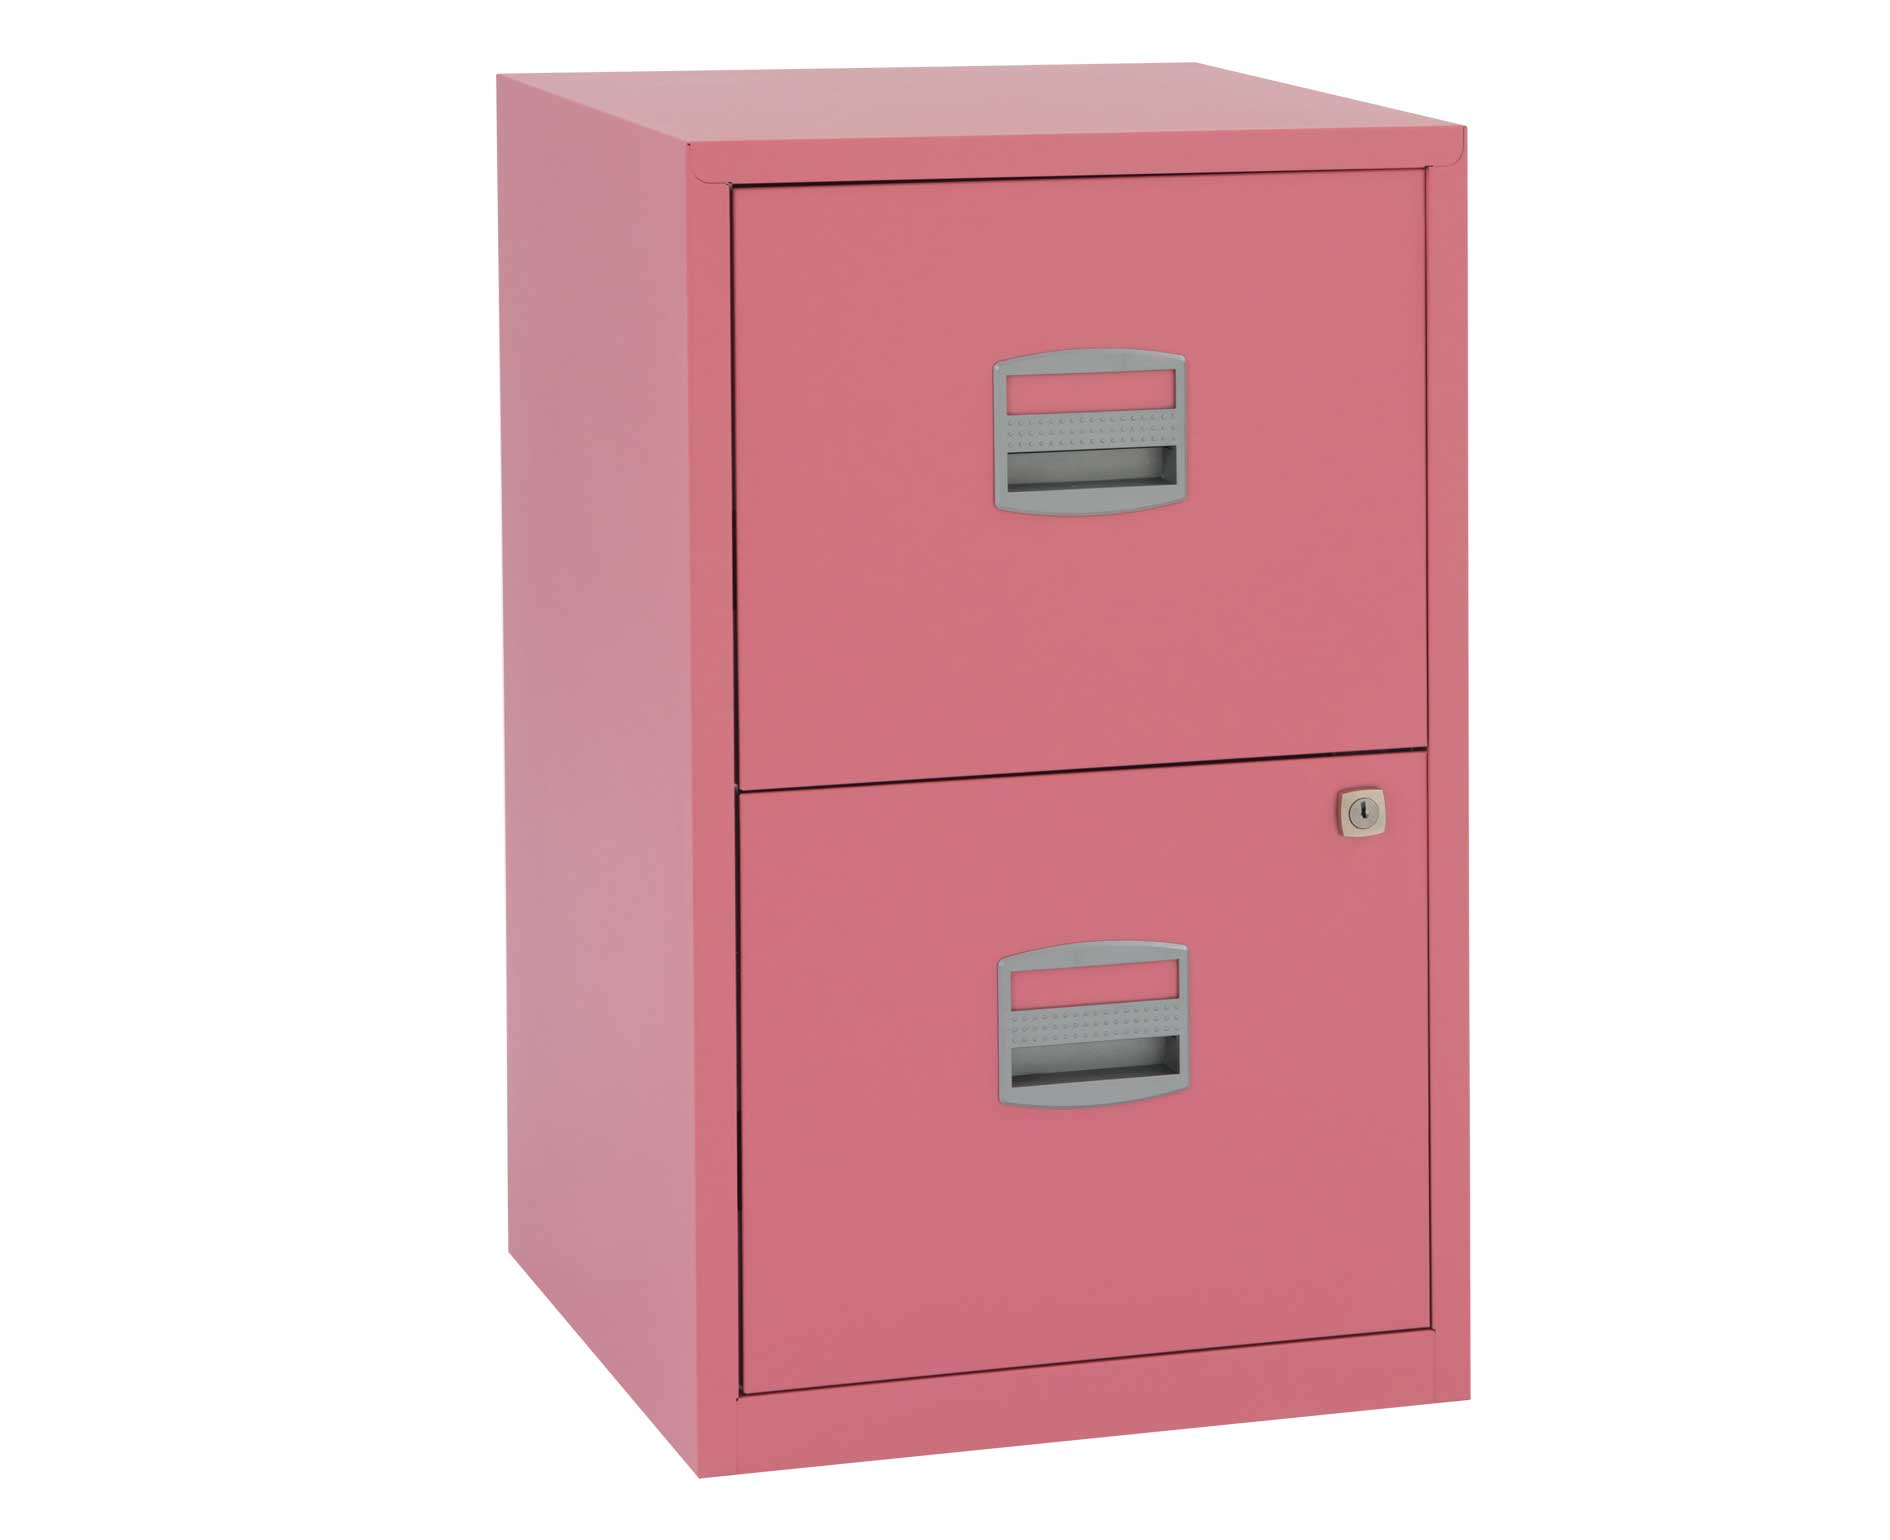 Pink Filing Cabinets Storage Shelving Furniture Storage Ryman pertaining to size 1890 X 1540